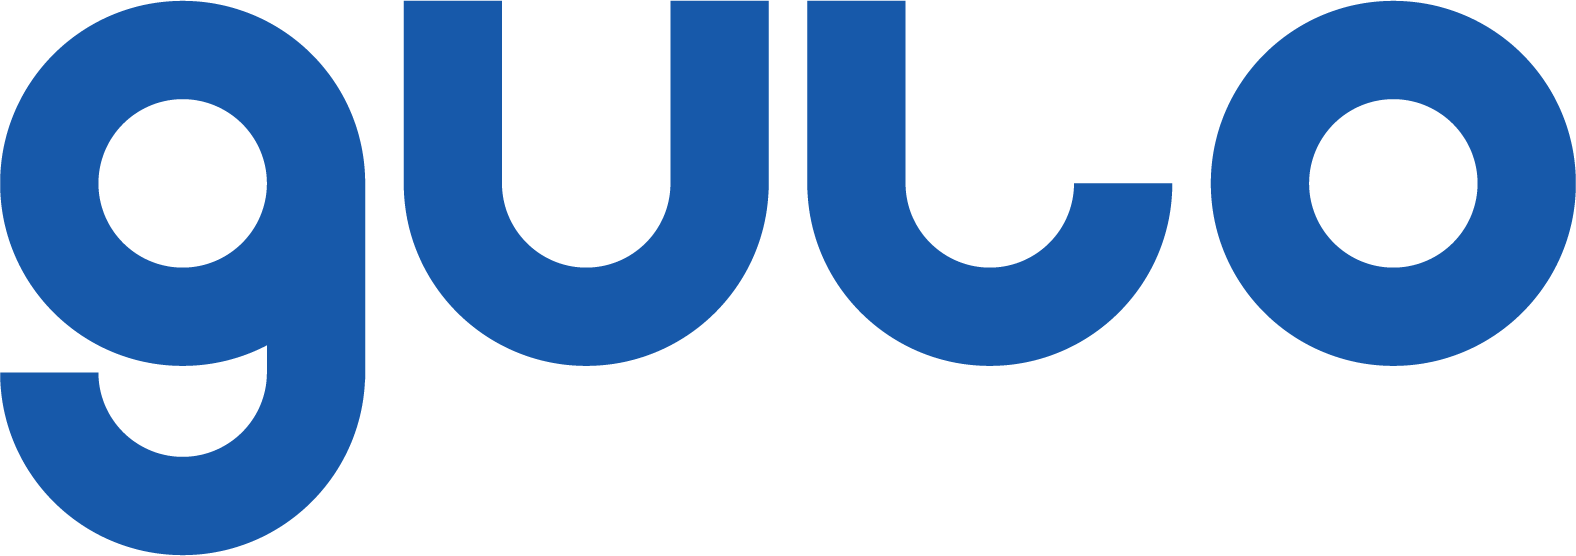 Gulo logo